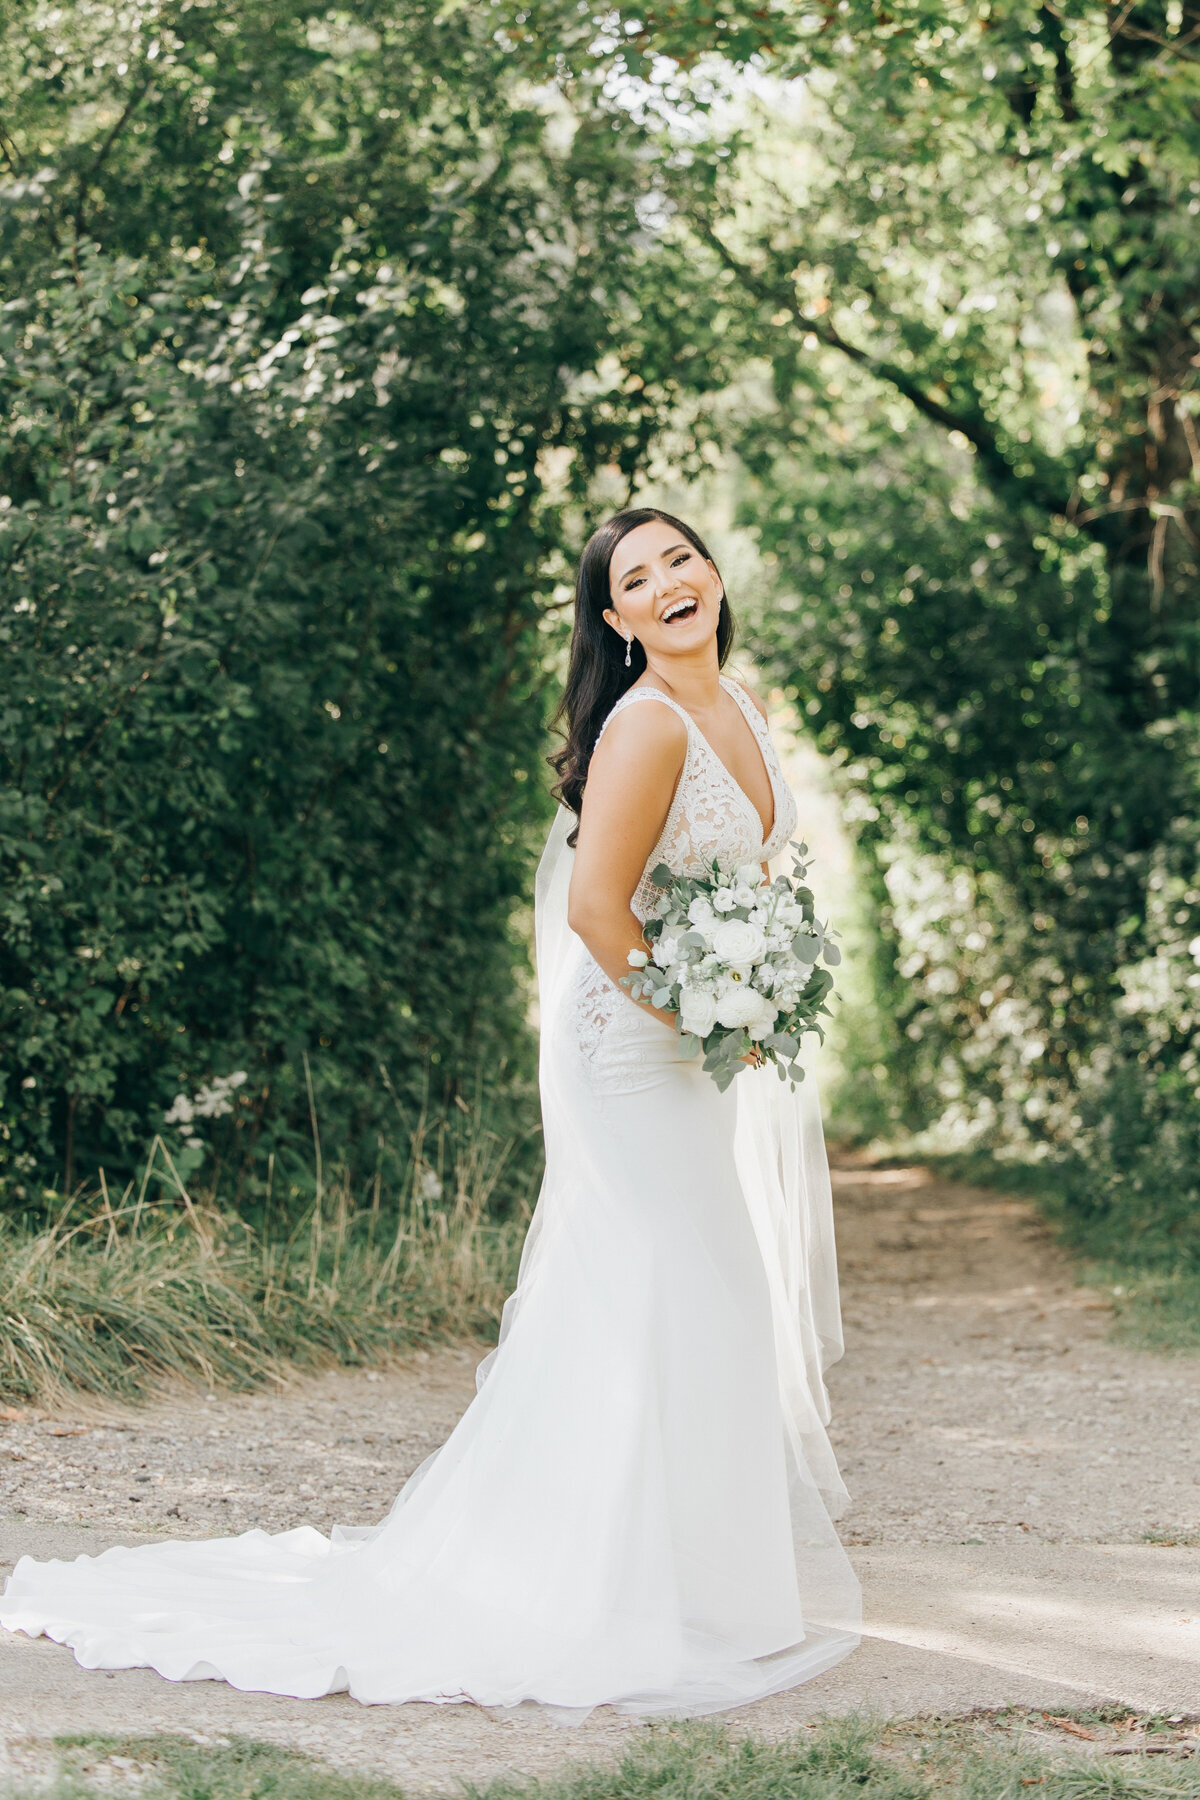 Elegant bride posing and smiling